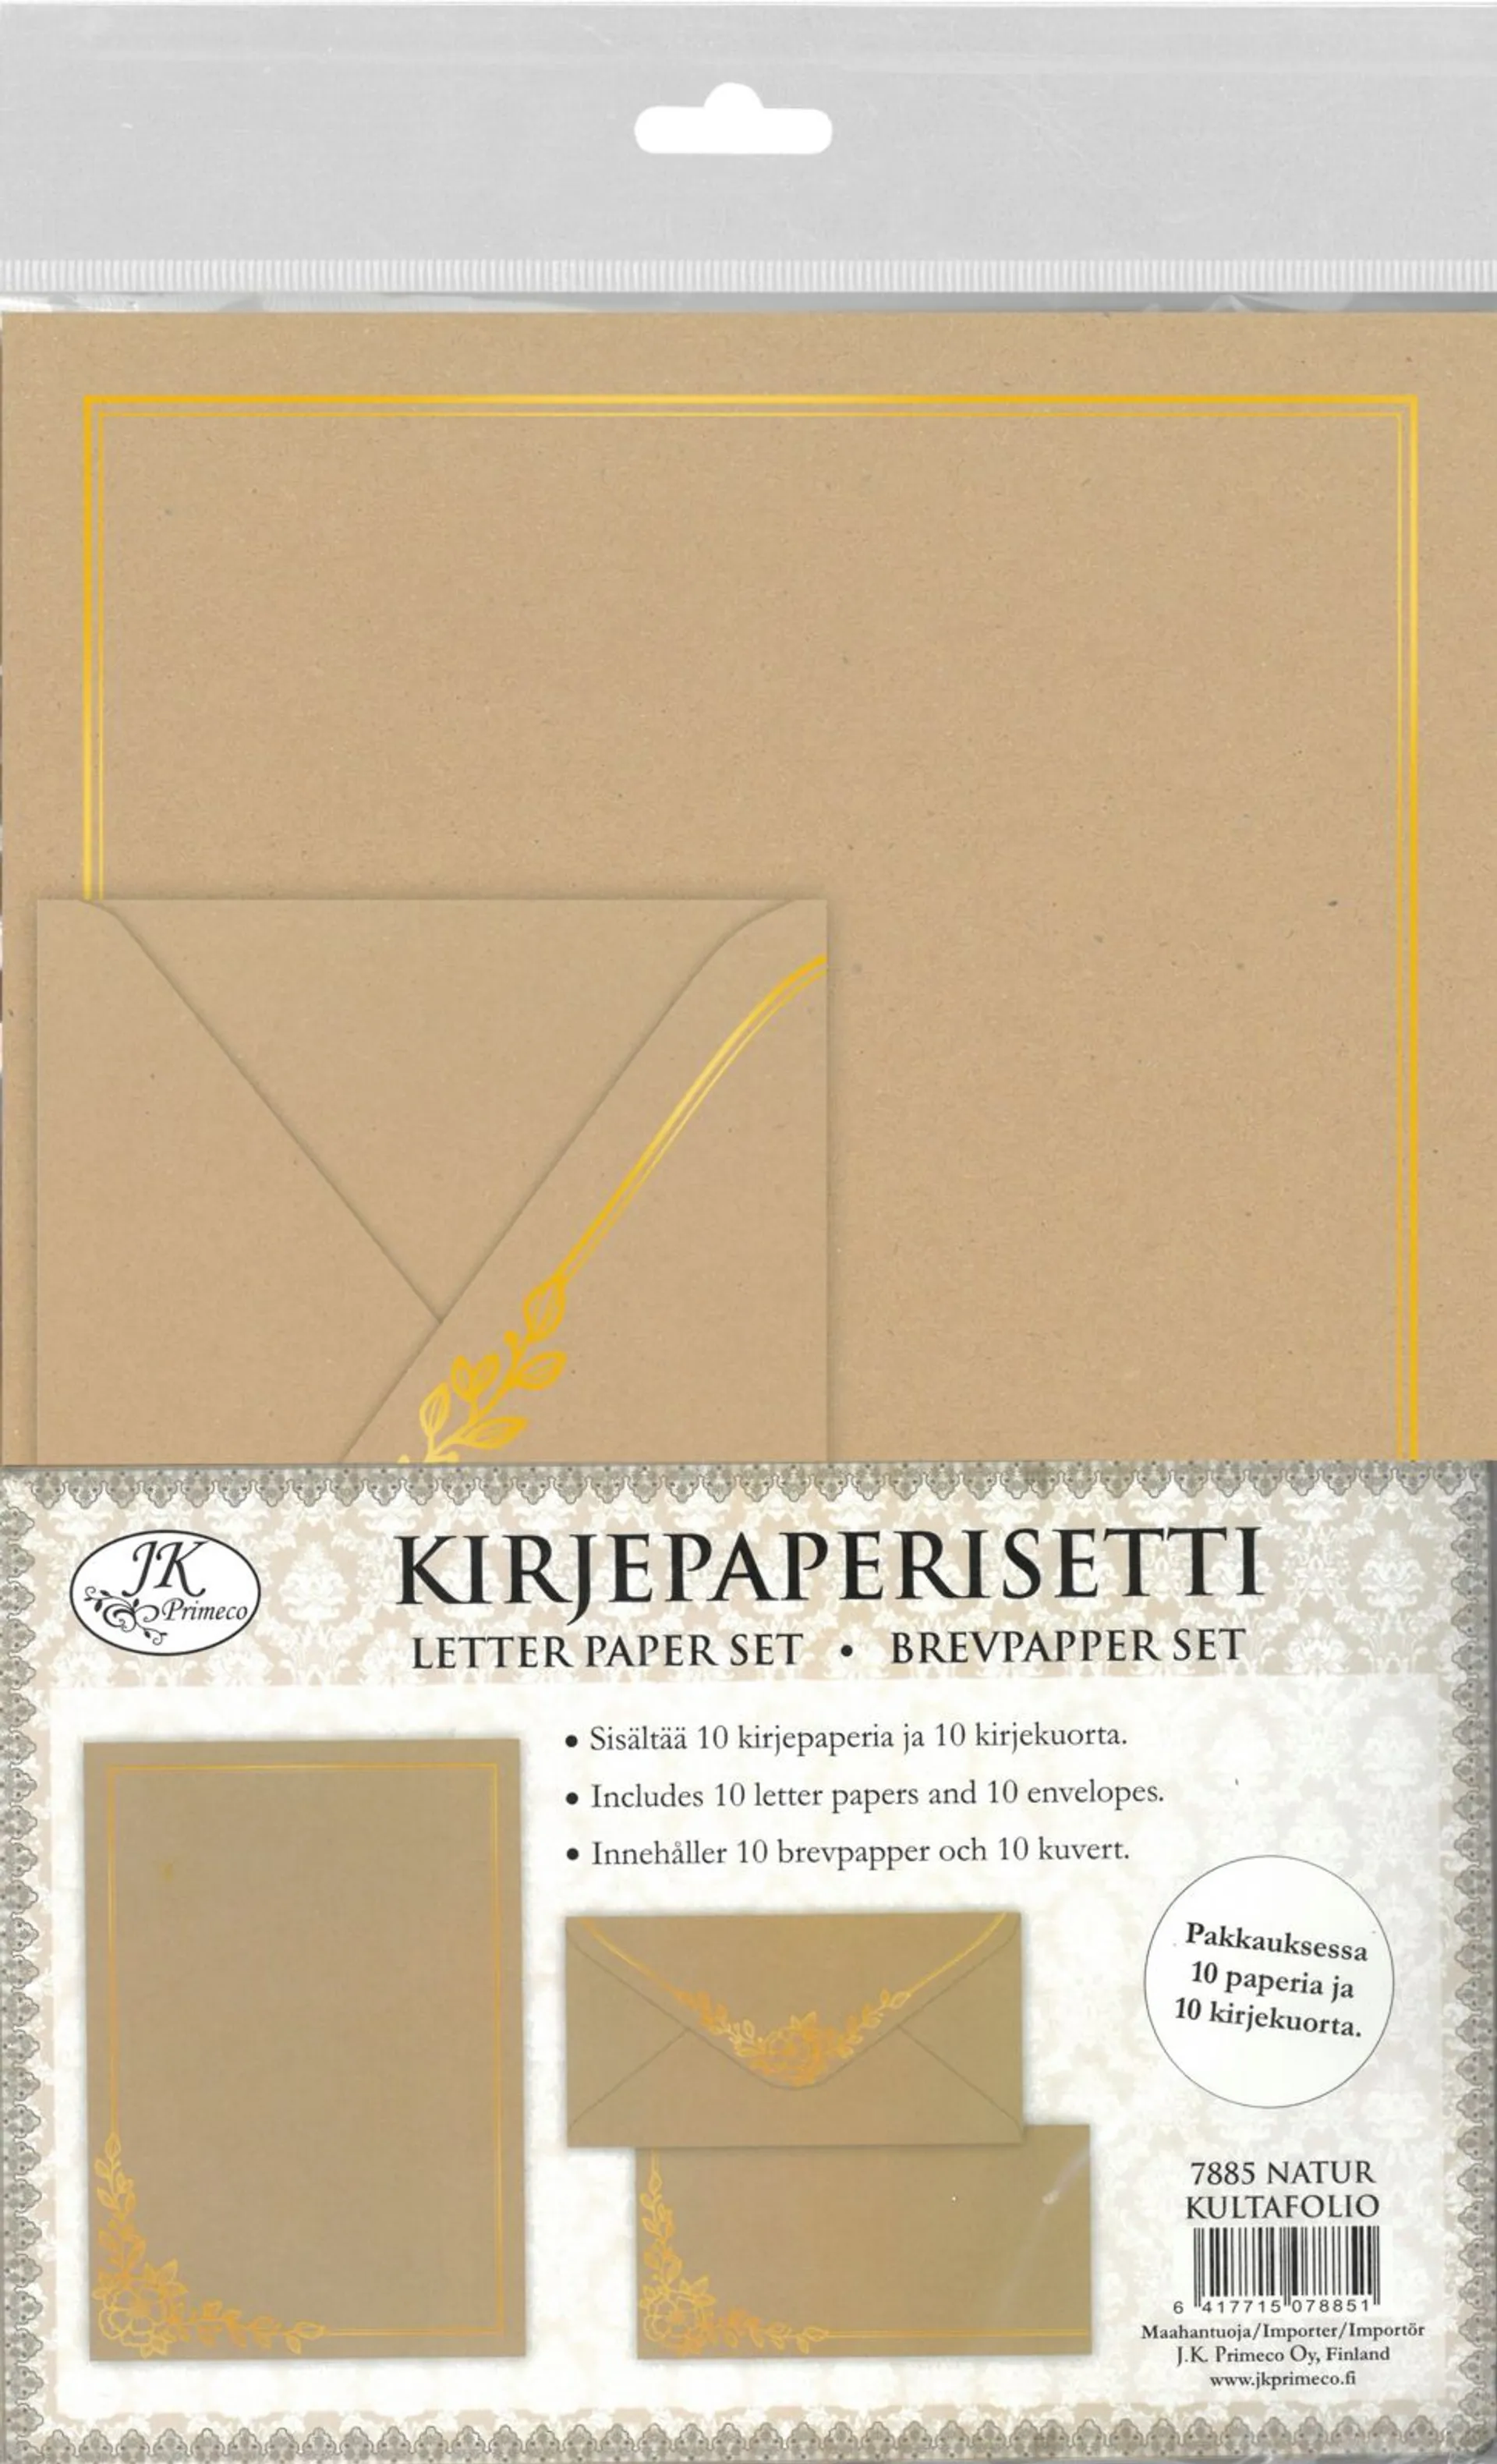 J.K. Primeco kirjepaperisetti natur kultafolio 10kpl+10kpl